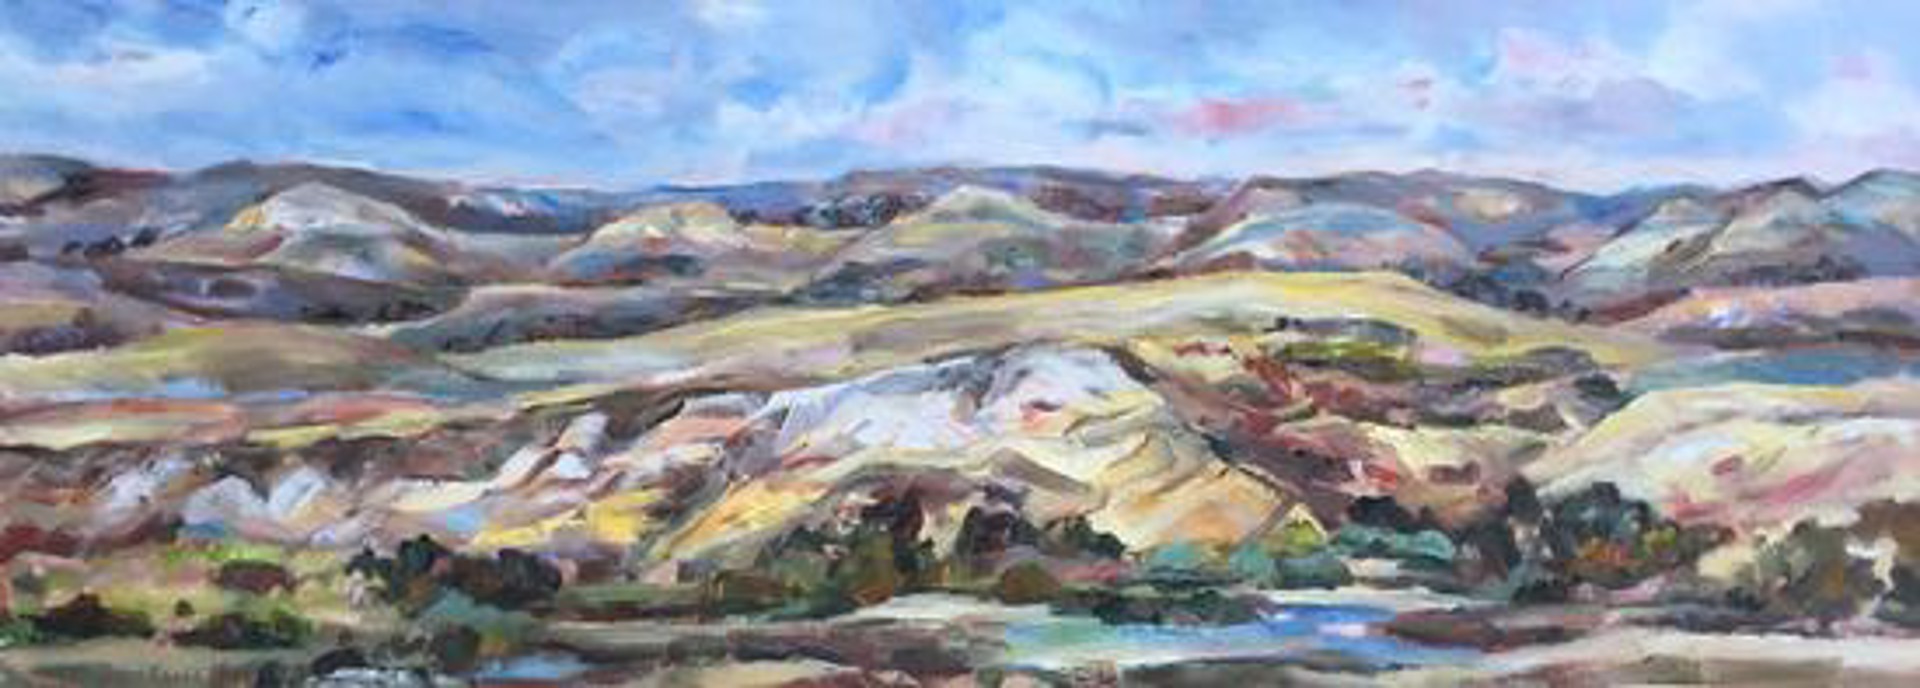 Whitemud Hills by Ravenscrag (1997) by Darlene Hay (1945 - )